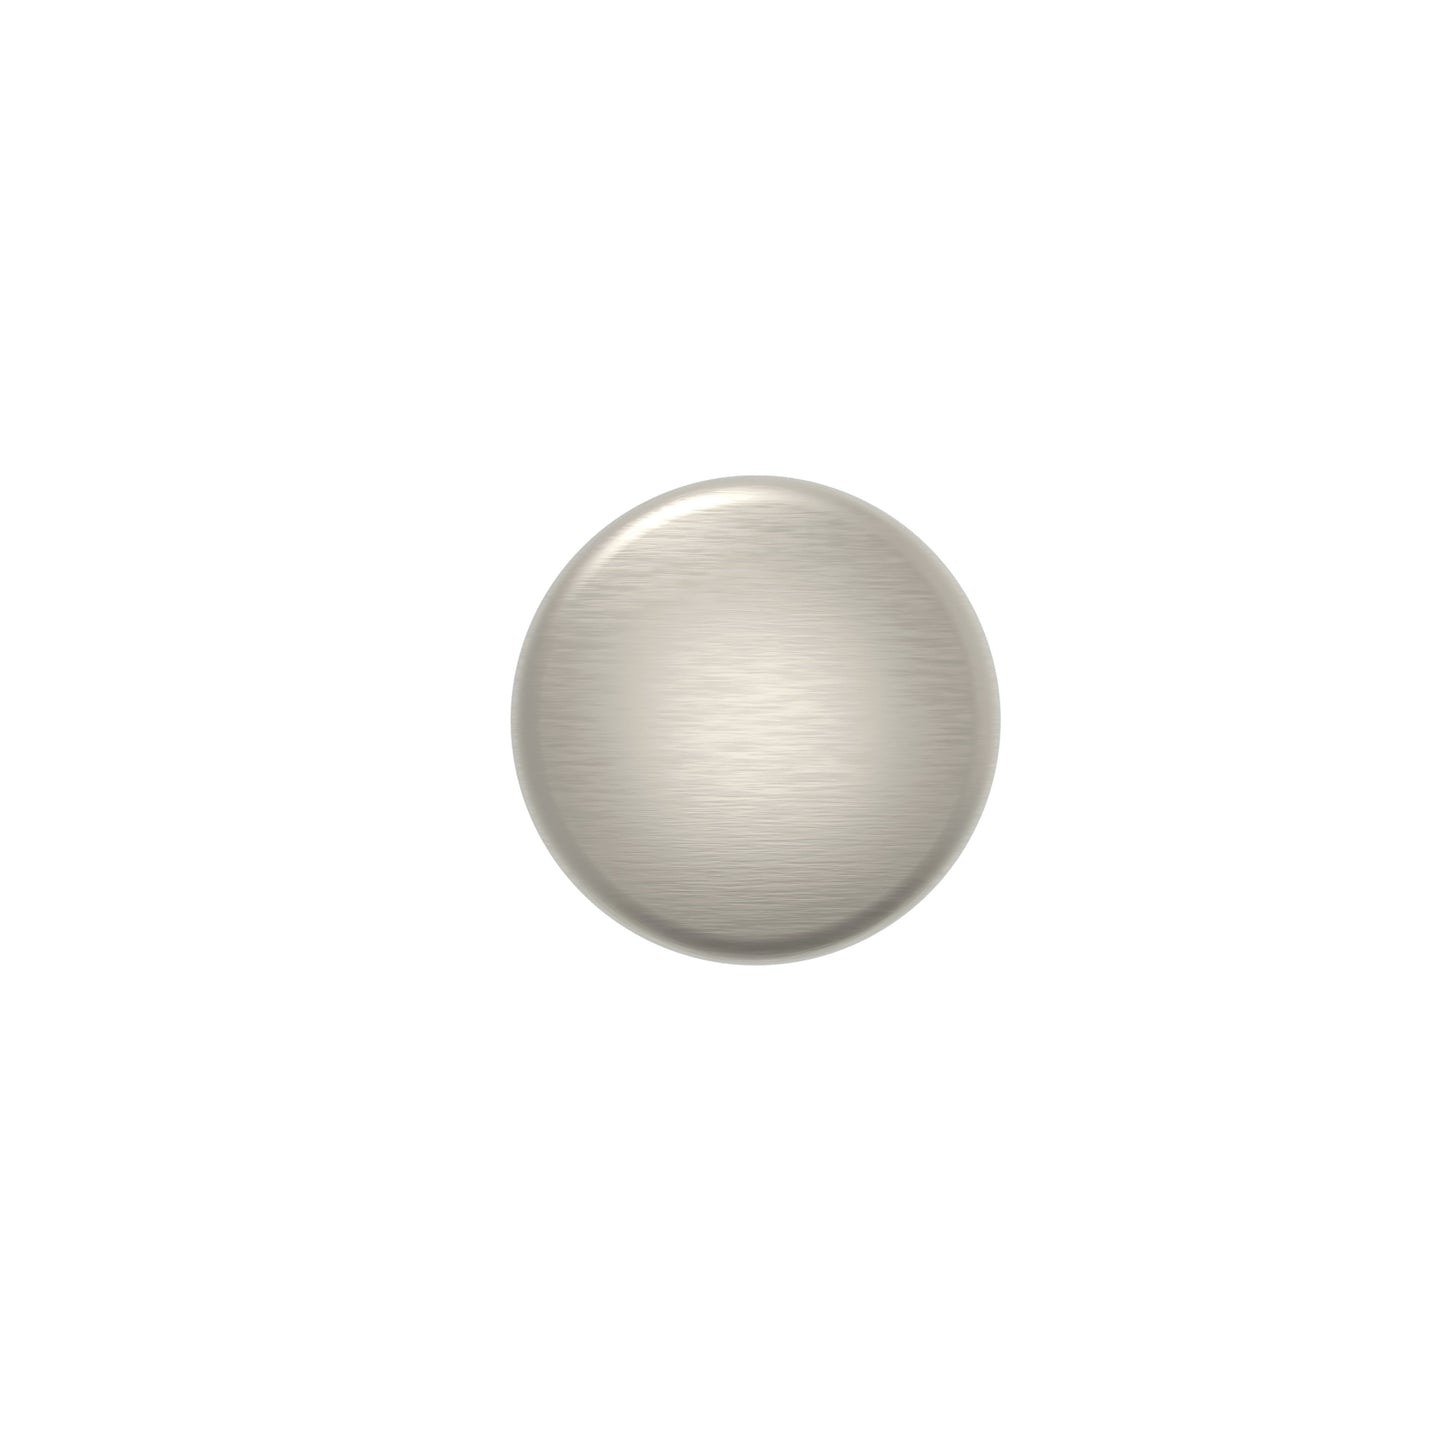 ZEN Design Cup 1" Diameter Brushed Nickel Single Hole Cabinet Knob